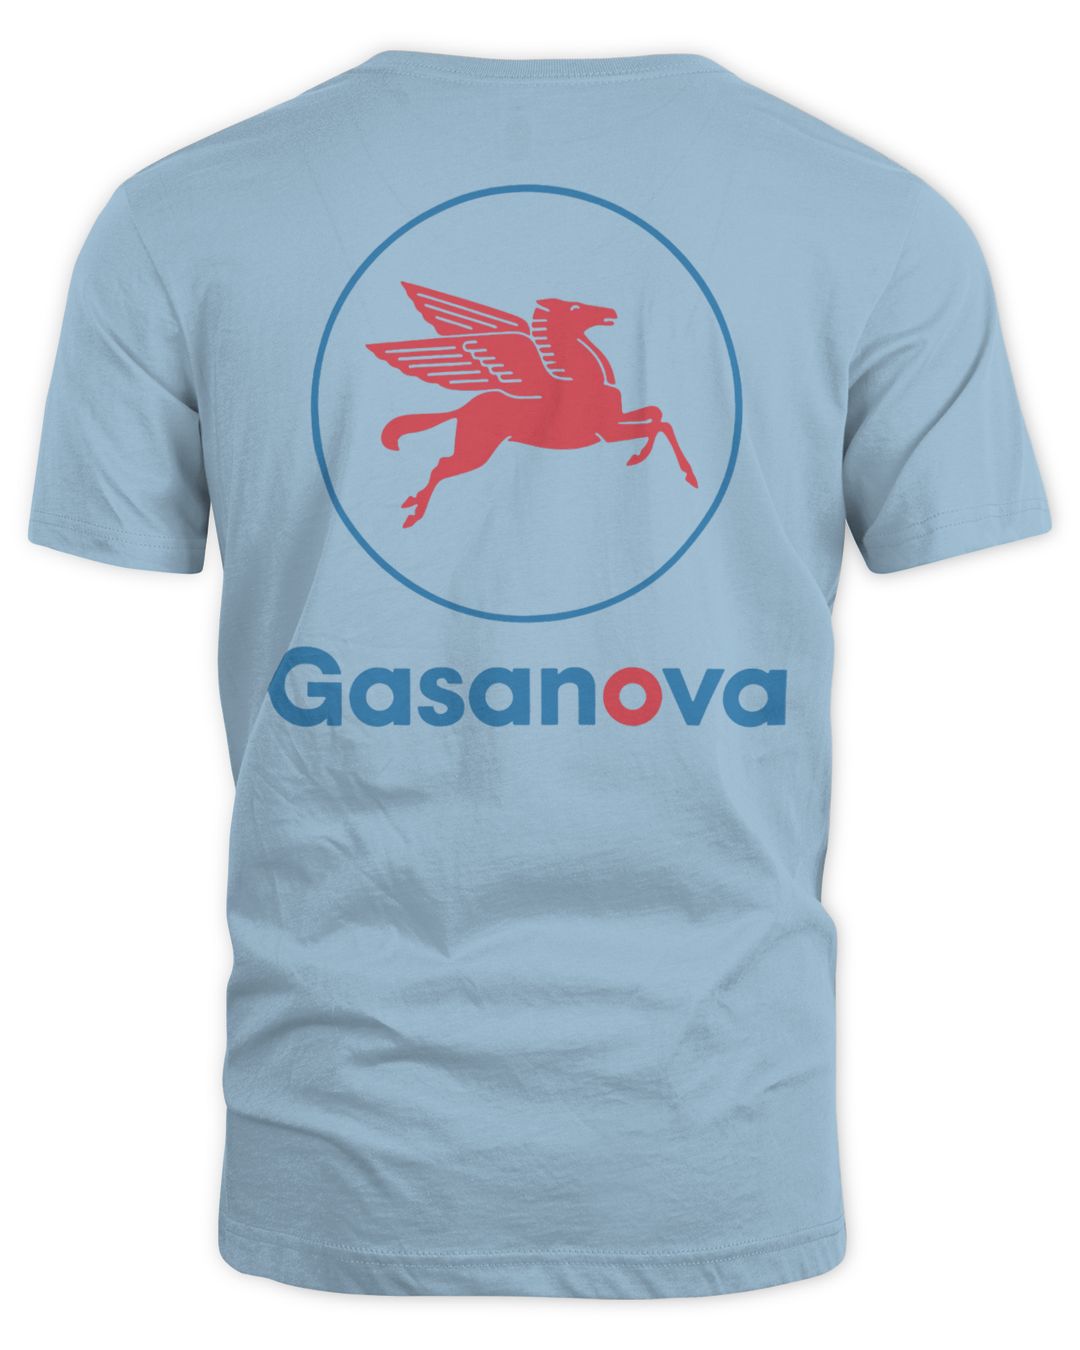 Yung Gravy Merch Gasanova X Pizzaslime Shirt